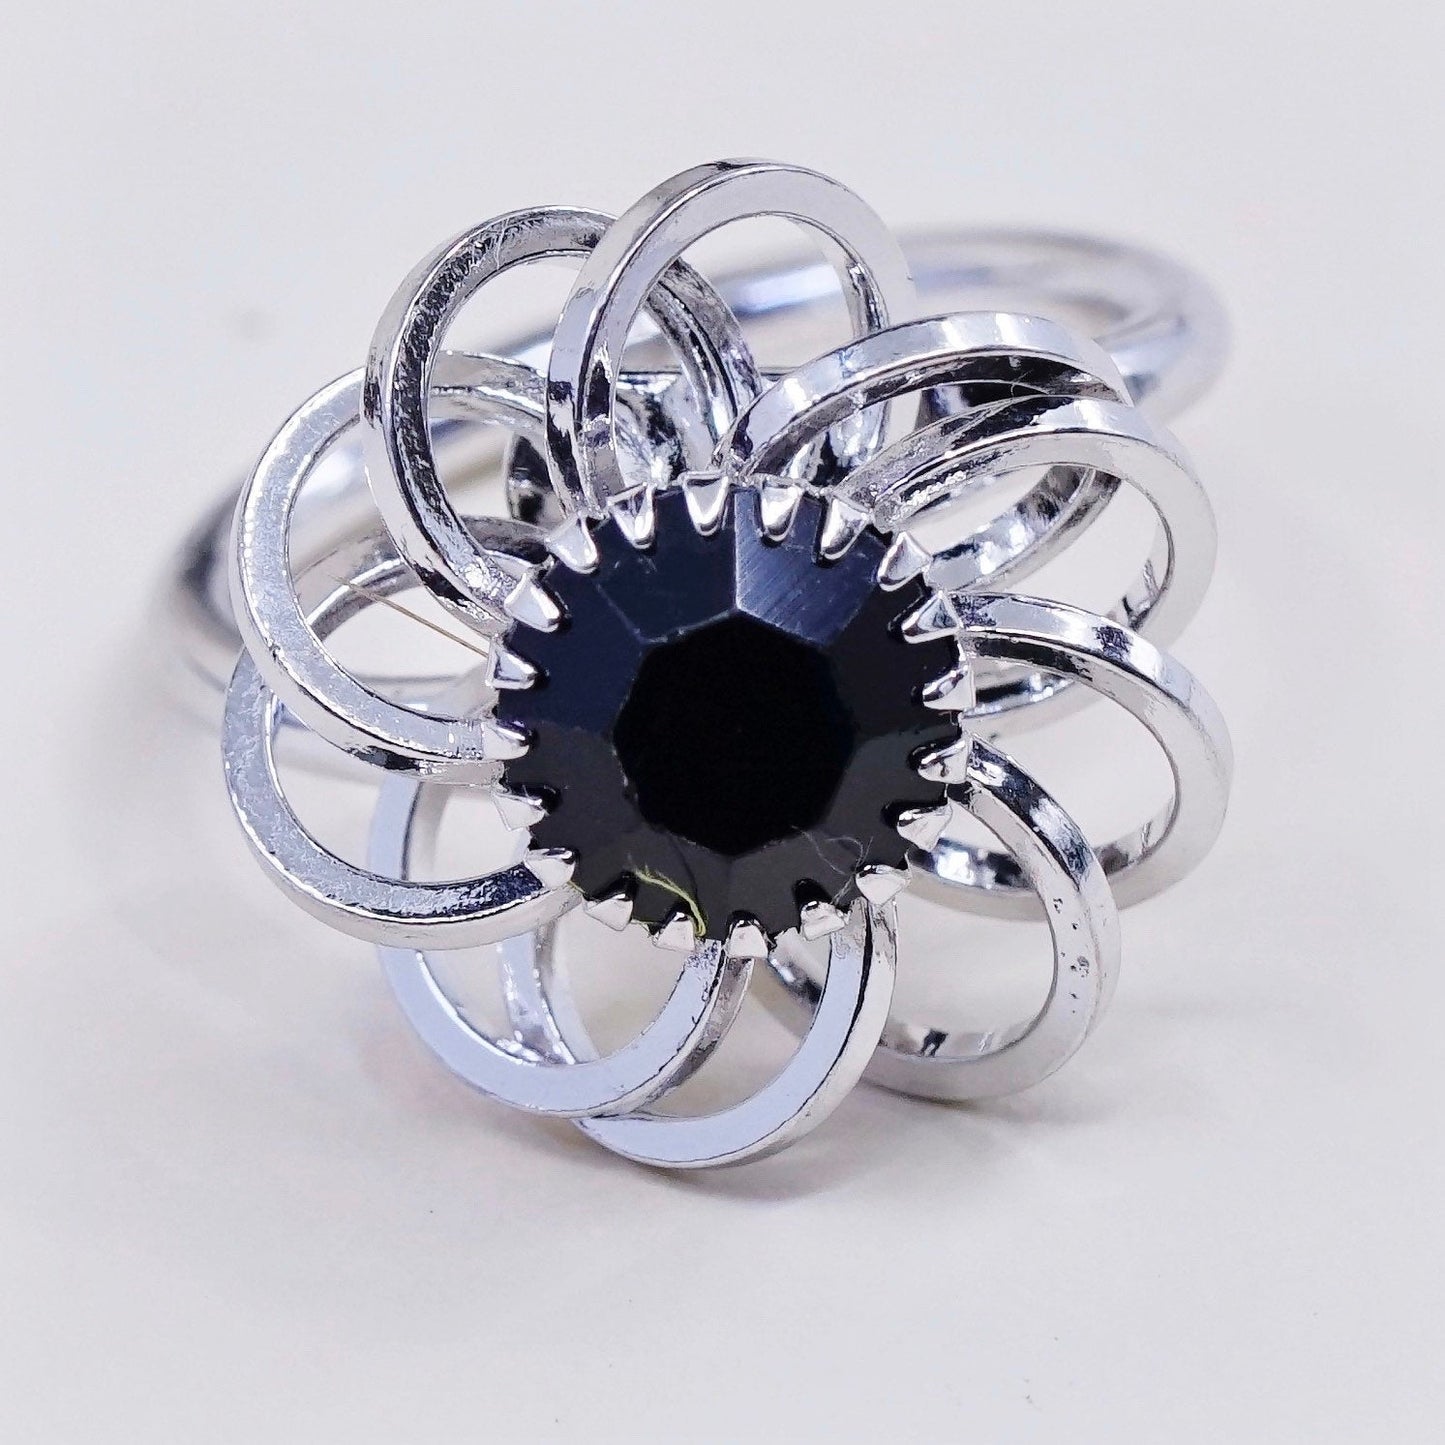 Size 6.5, vtg Sarah COV silver tone ring, flower w/ black glass details